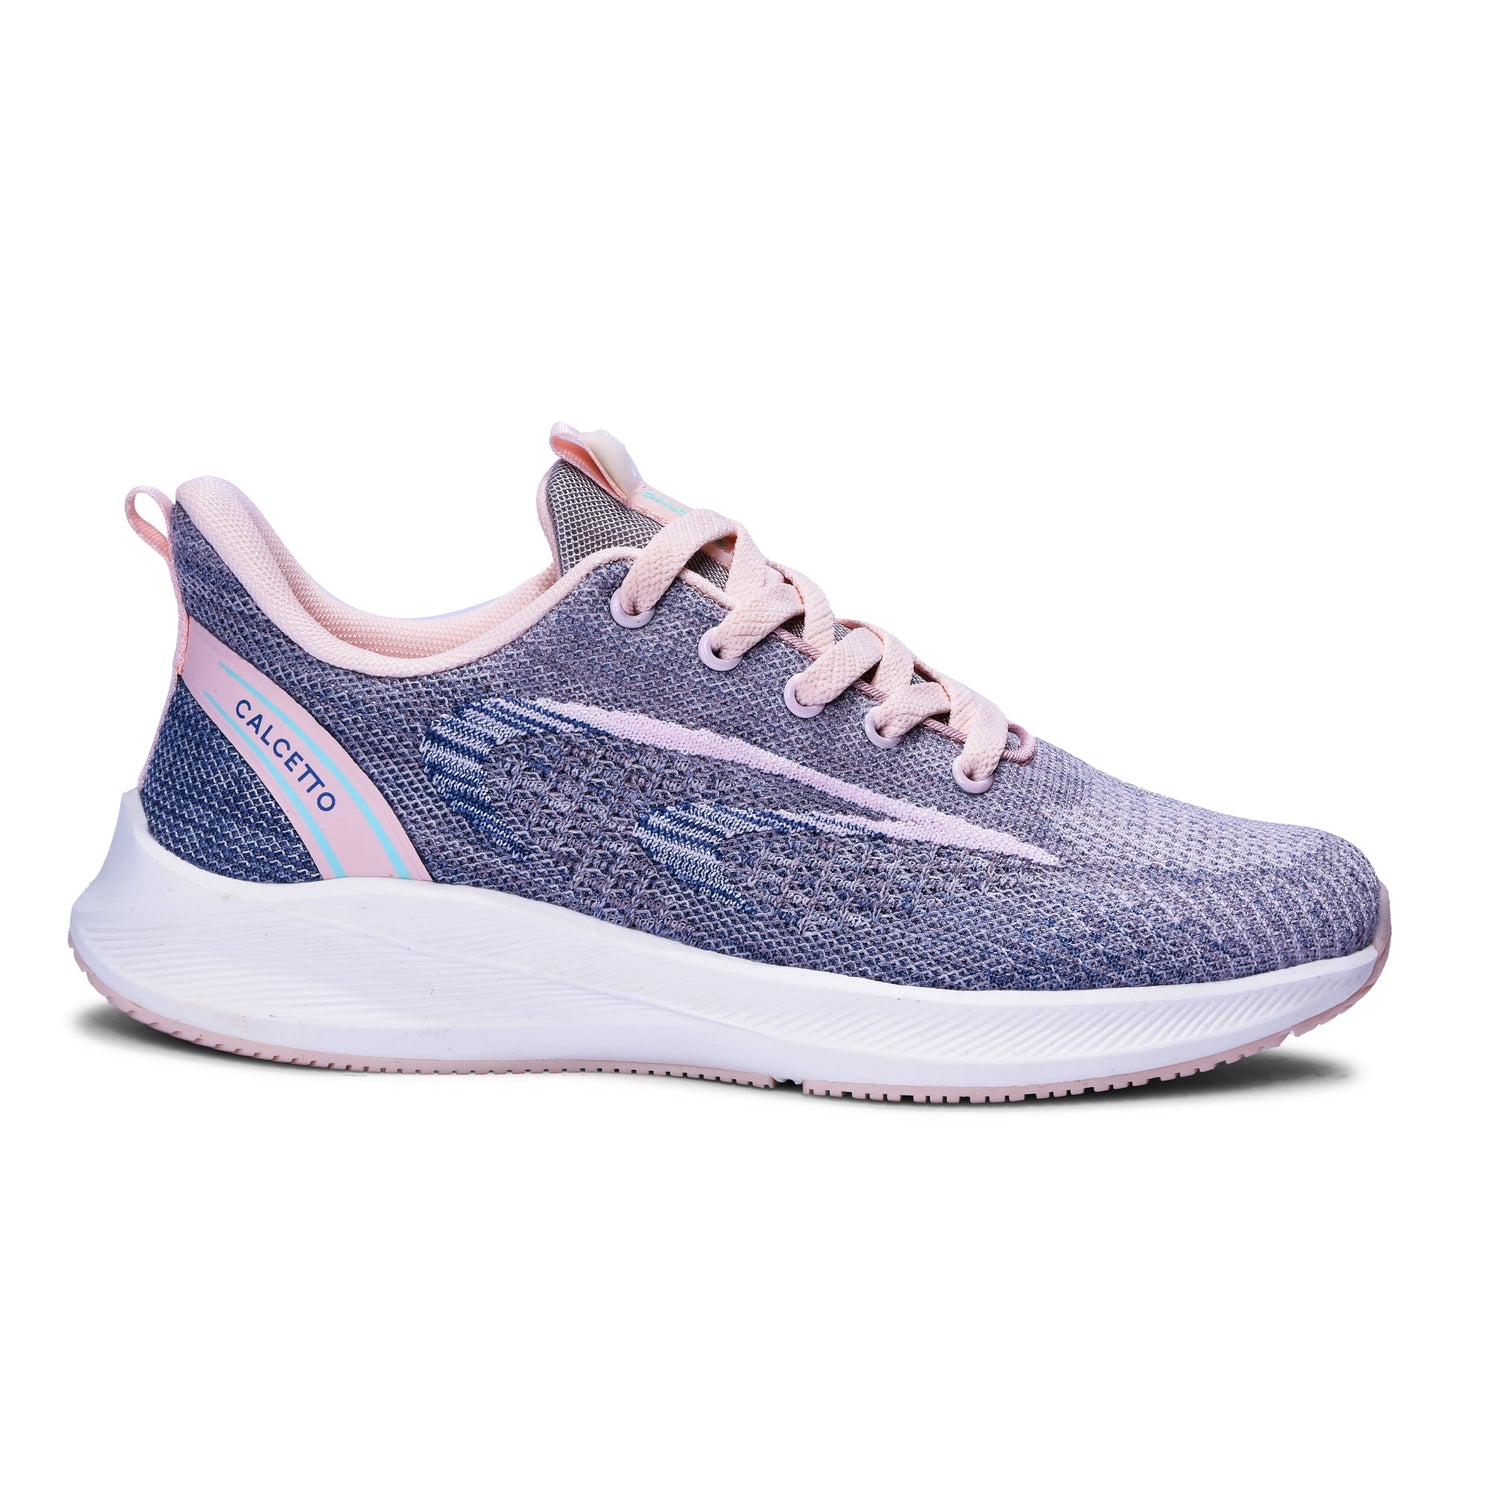 Calcetto CLT-9823 D Grey Peach Running Sports Shoe For Women